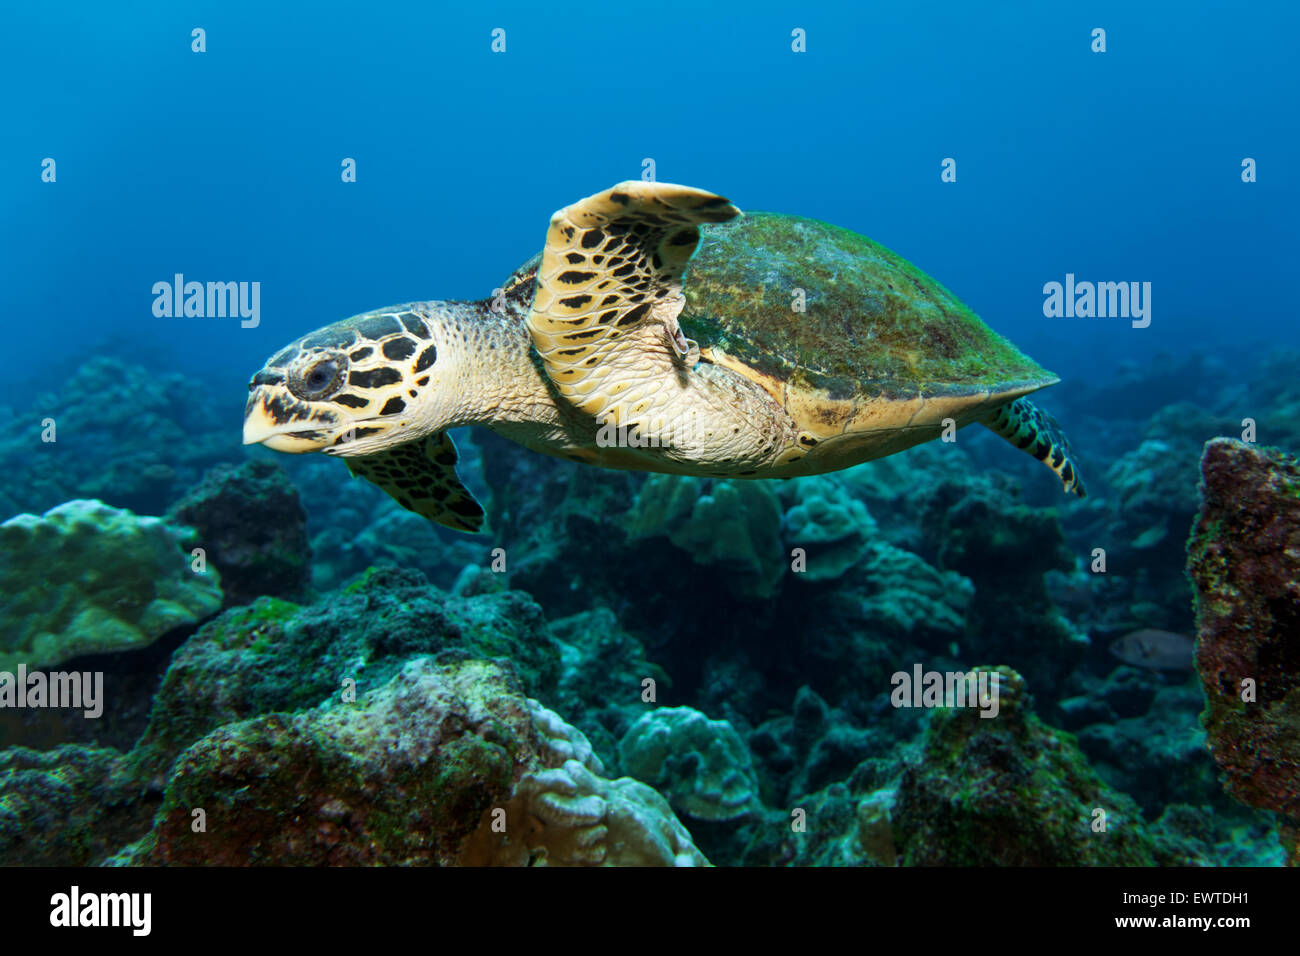 Unechte Kerettschildkröte (Caretta caretta) schwimmt übers Riff, La Isla del Coco, Kokos Weltnaturerbe Insel, Unesco, Costa Rica, el Z.E. Foto de stock